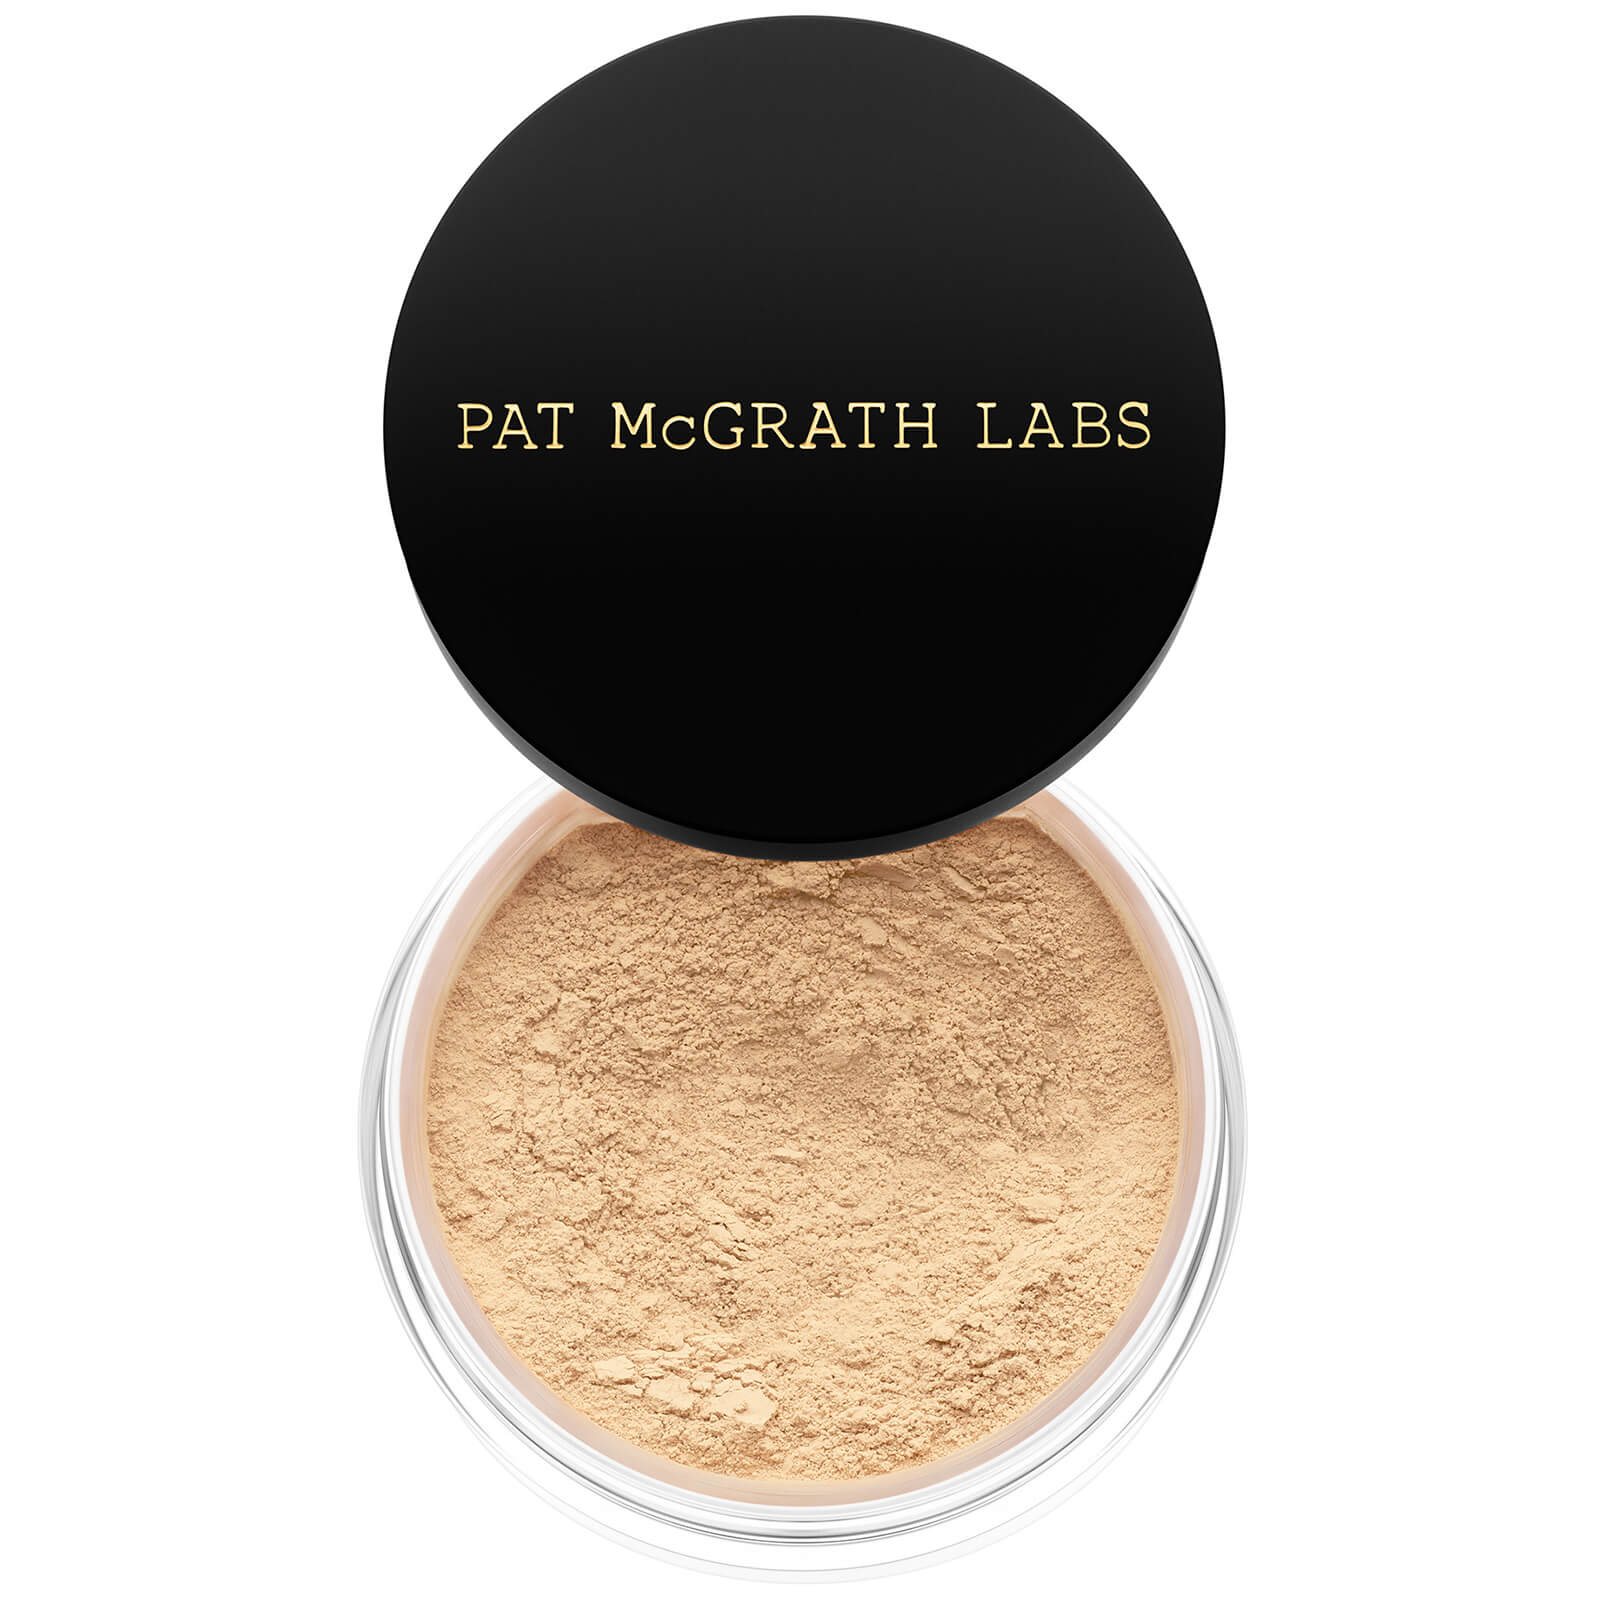 Pat Mcgrath Labs Skin Fetish: Sublime Perfection Setting Powder 8.5g (various Shades) - Light Medium 2